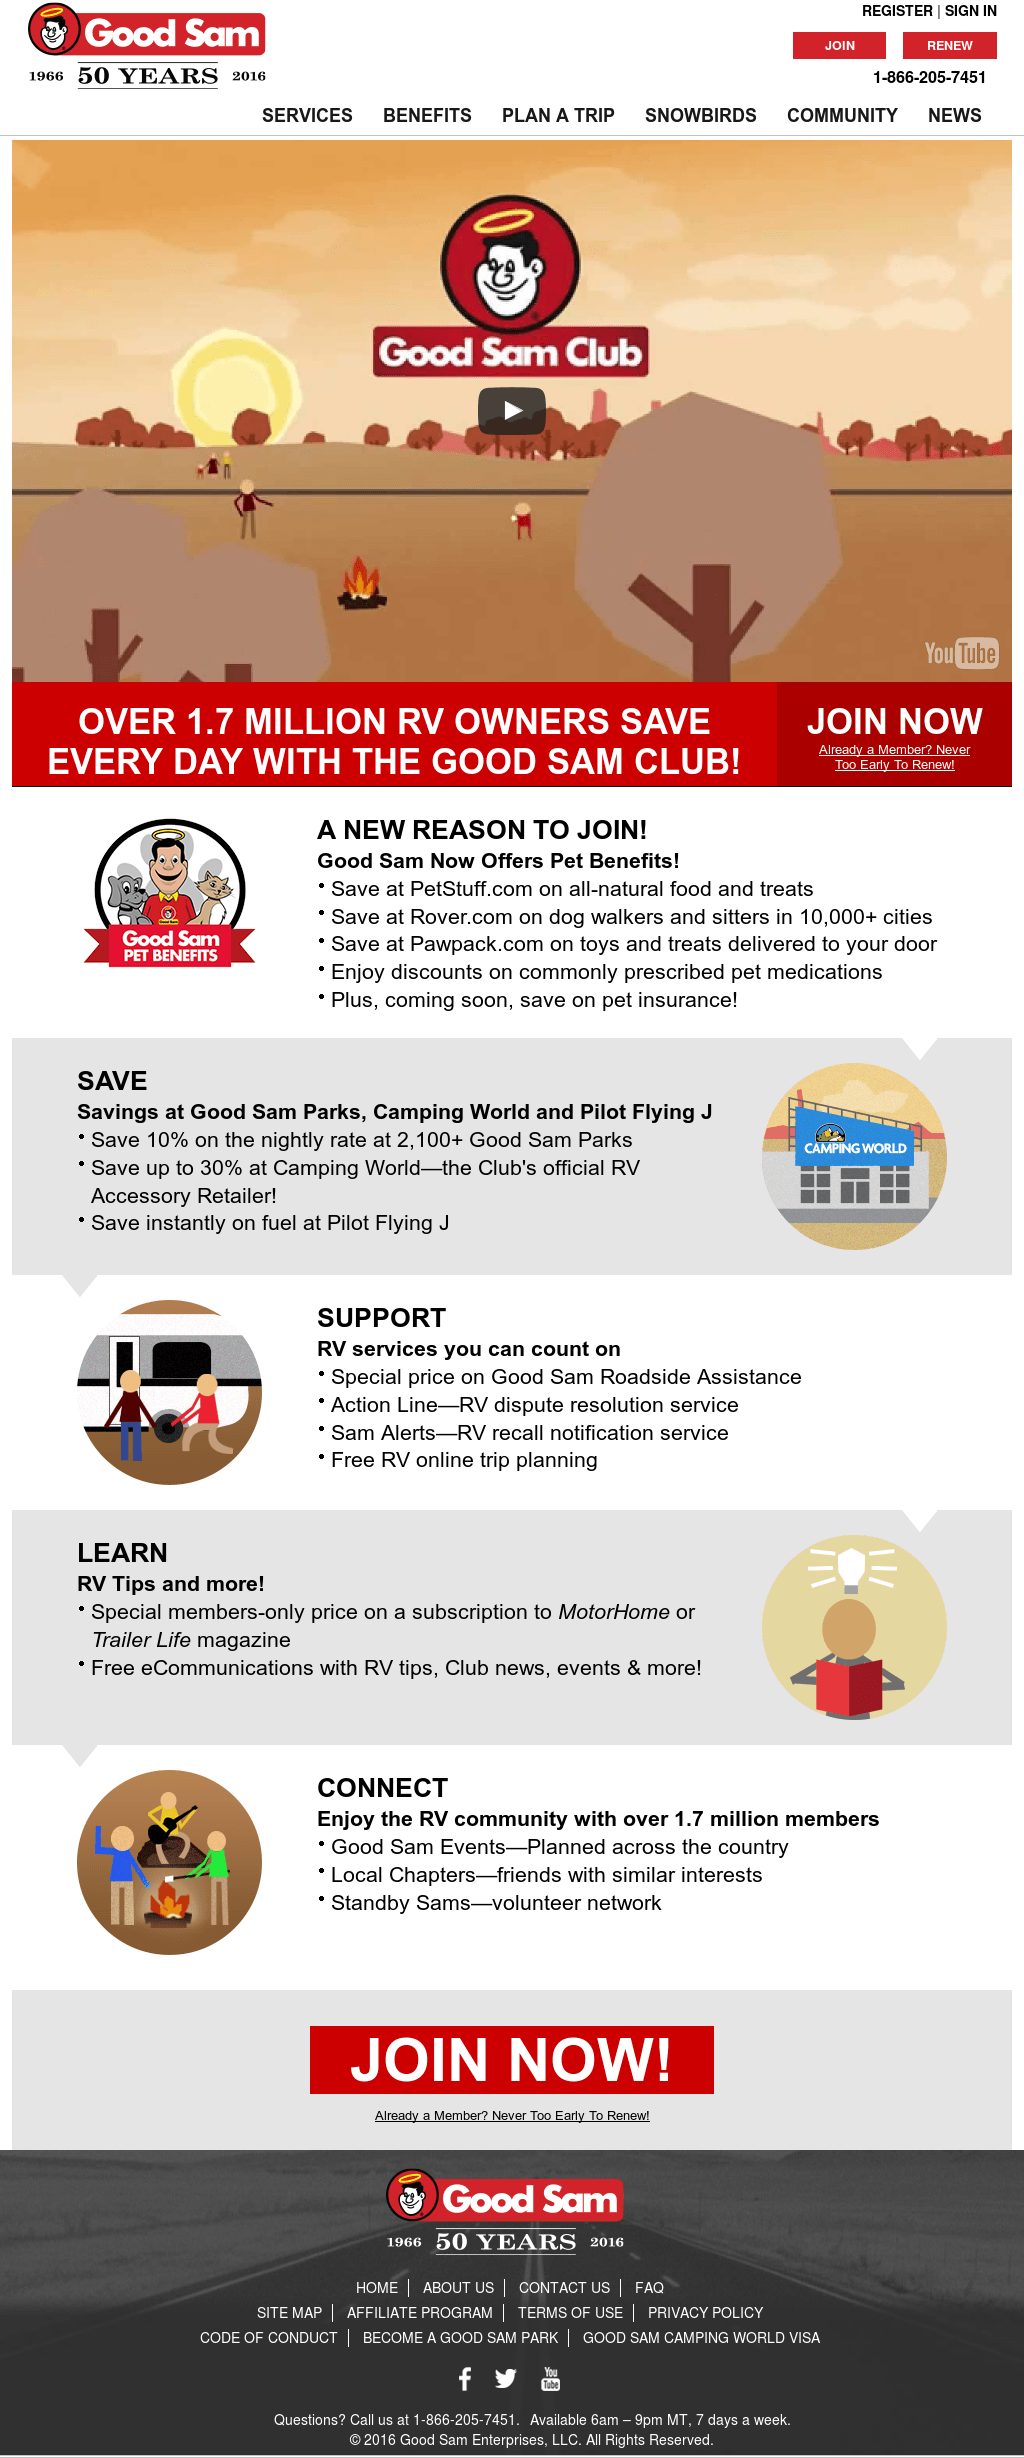 Good Sam Club Logo - Good Sam Club Competitors, Revenue and Employees - Owler Company Profile